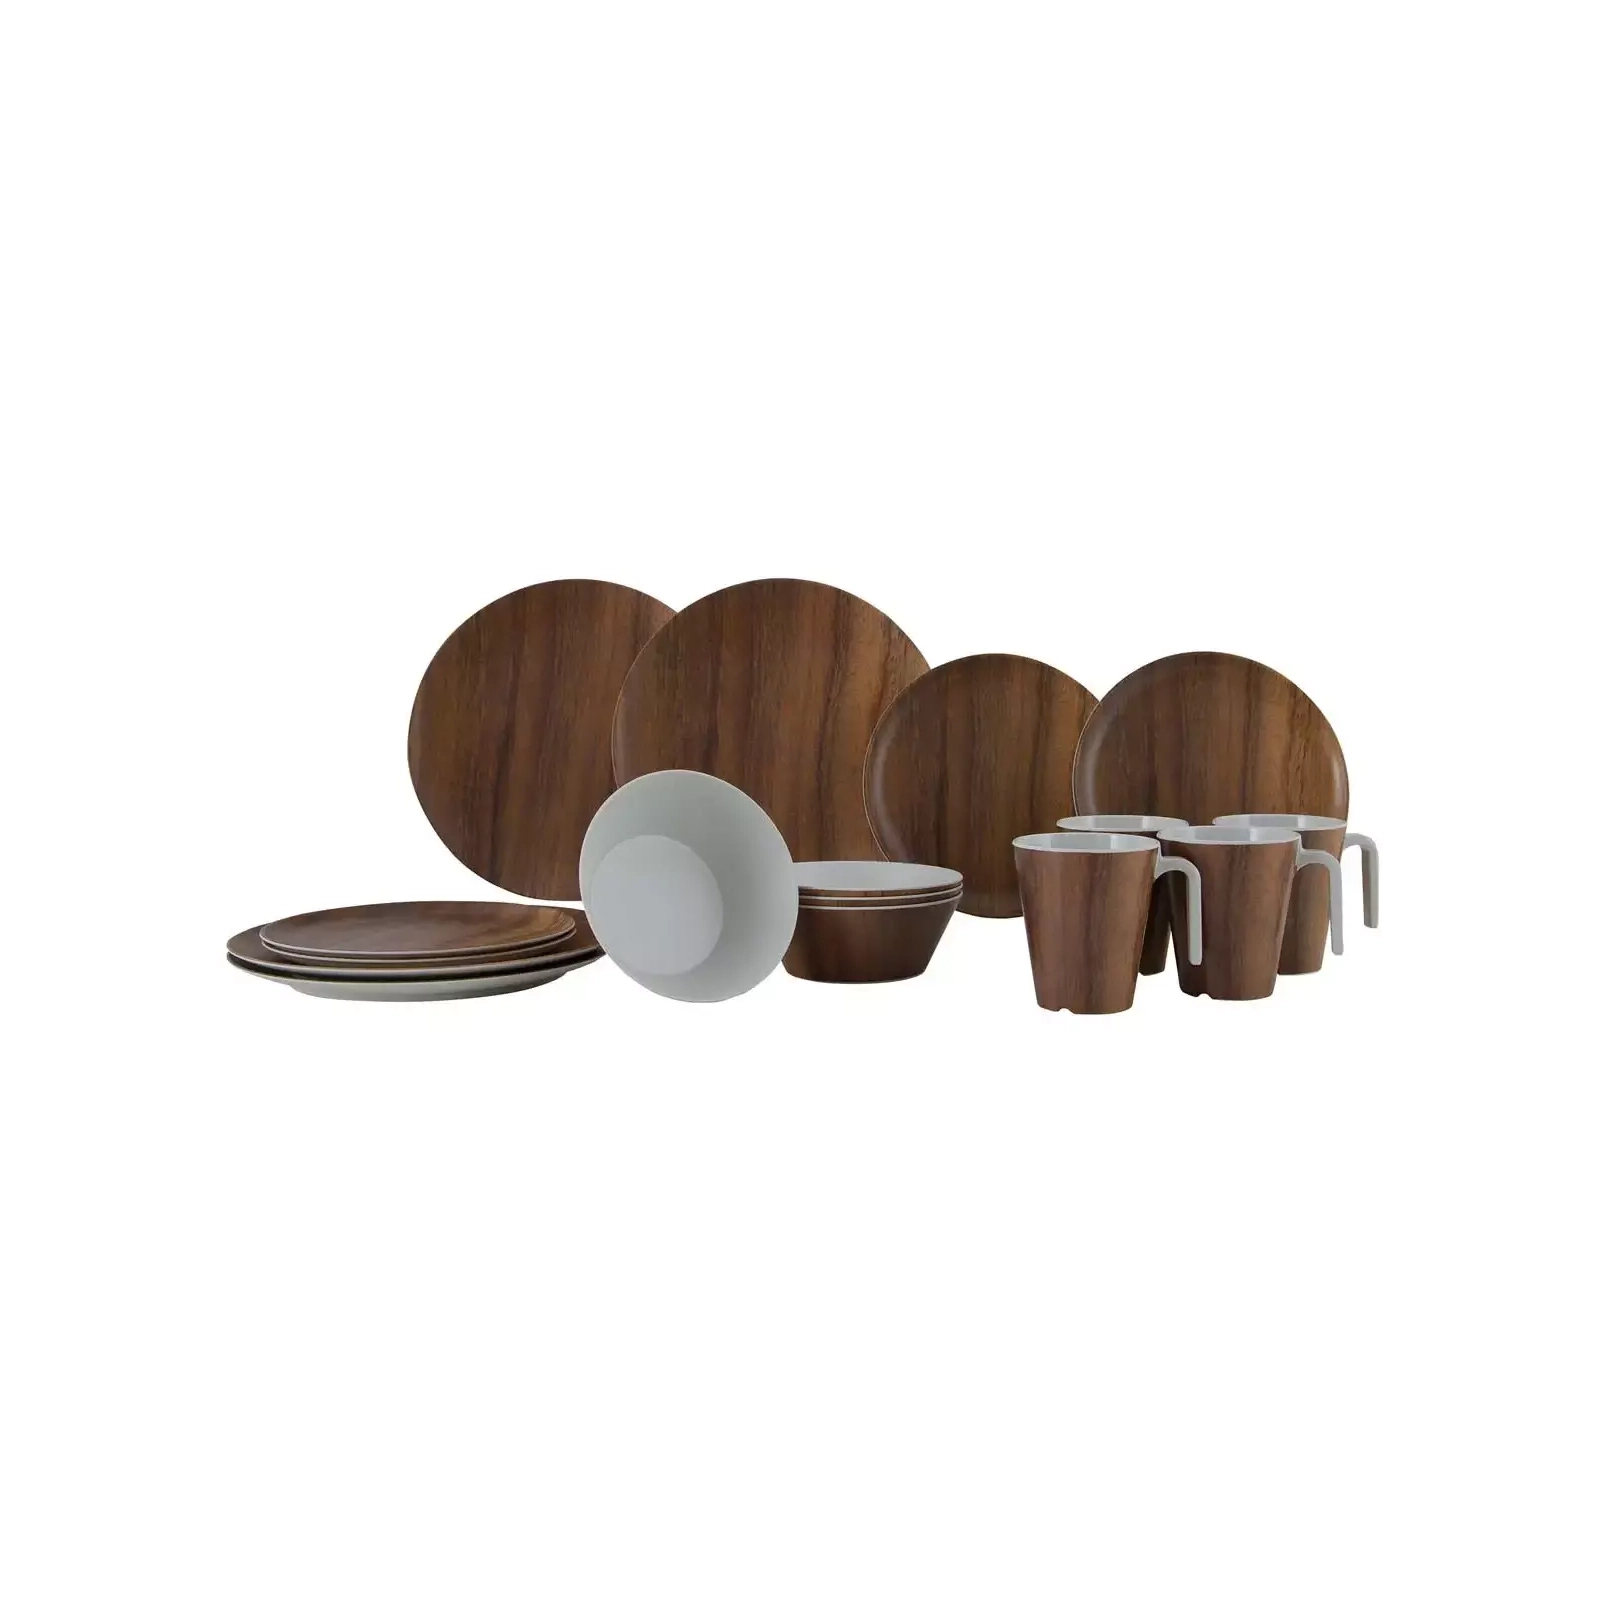 Набор туристической посуды Gimex Tableware Nature 16 Pieces 4 Person Wood (6913100)